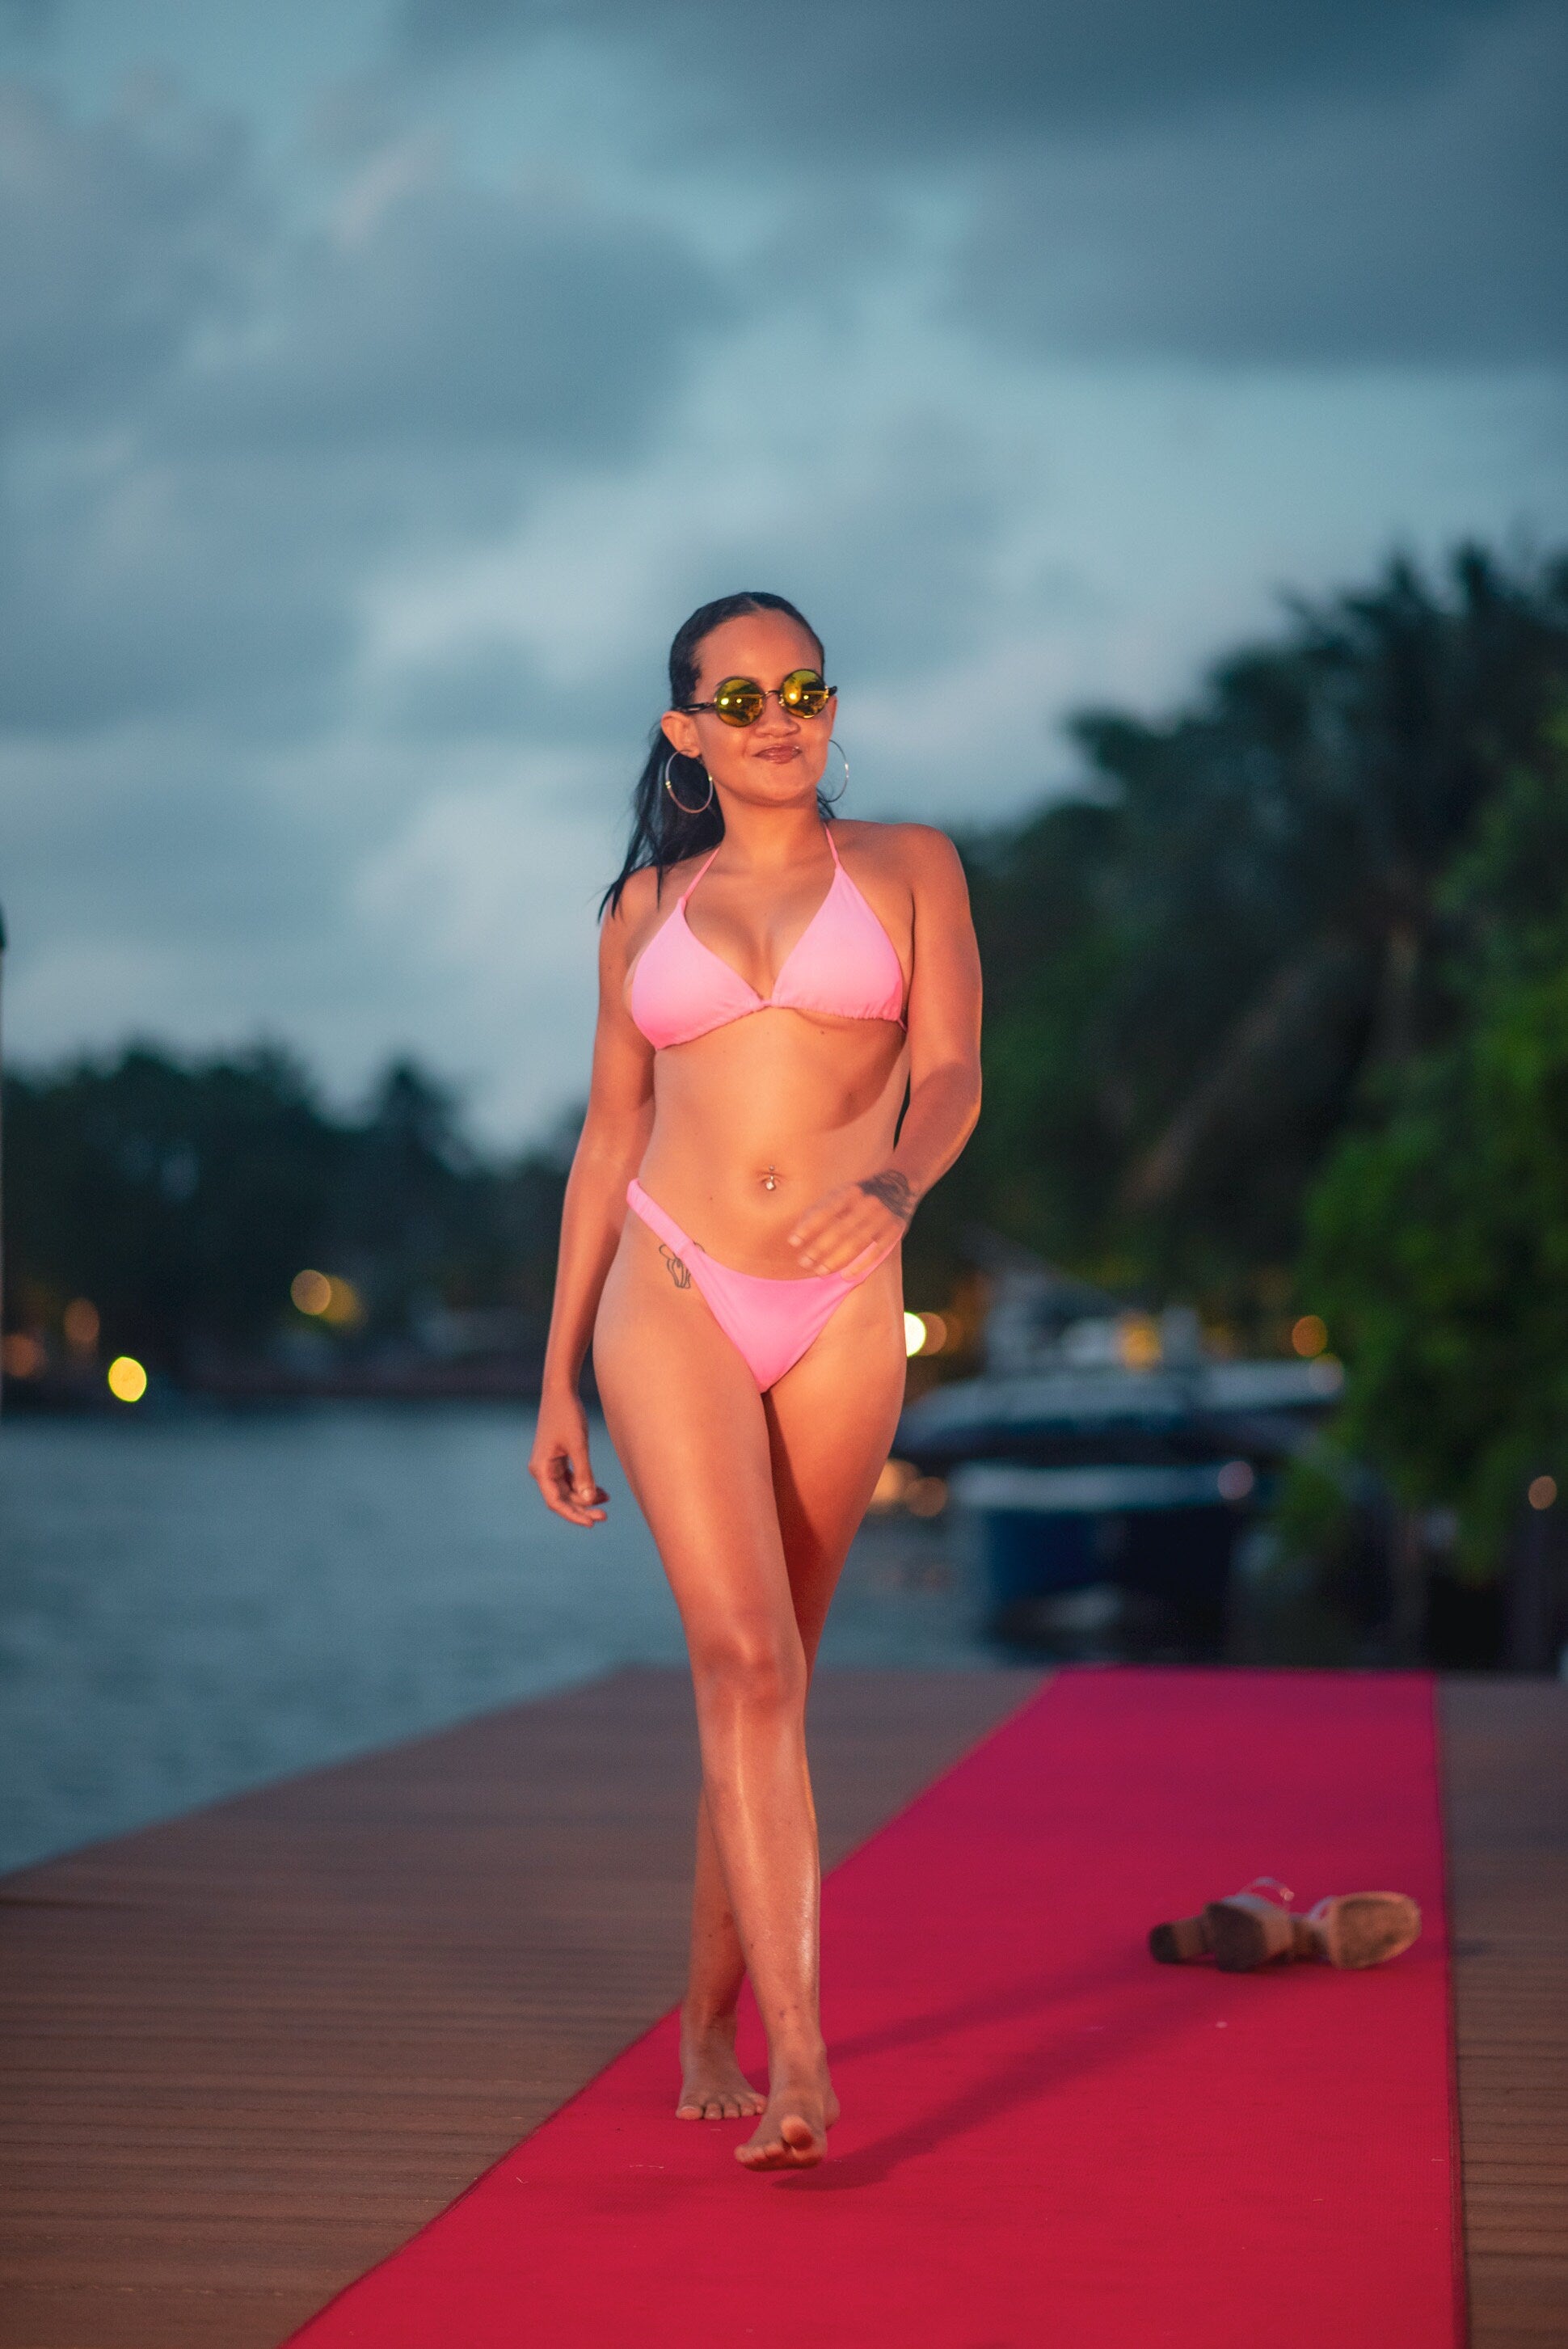 The Hunter Solid Pink Bikini Set Halter Triangle Bra & Thong 2 Piece Swimwear Swim Suit